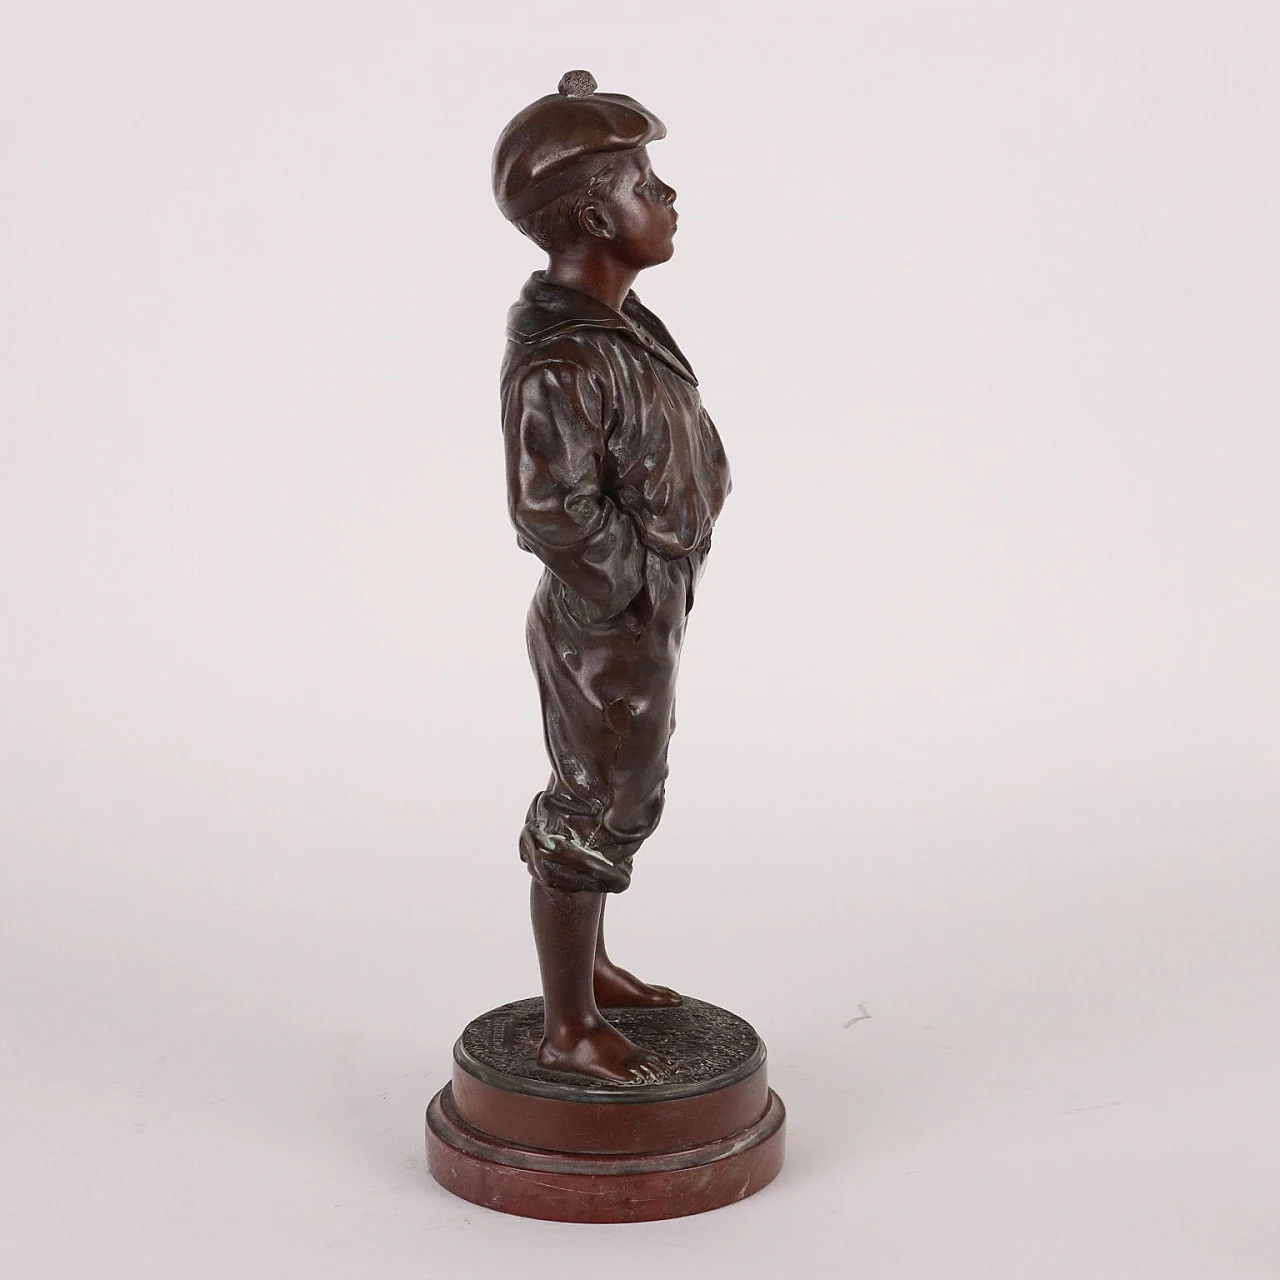 Whistling boy, bronze sculpture on marble base 9